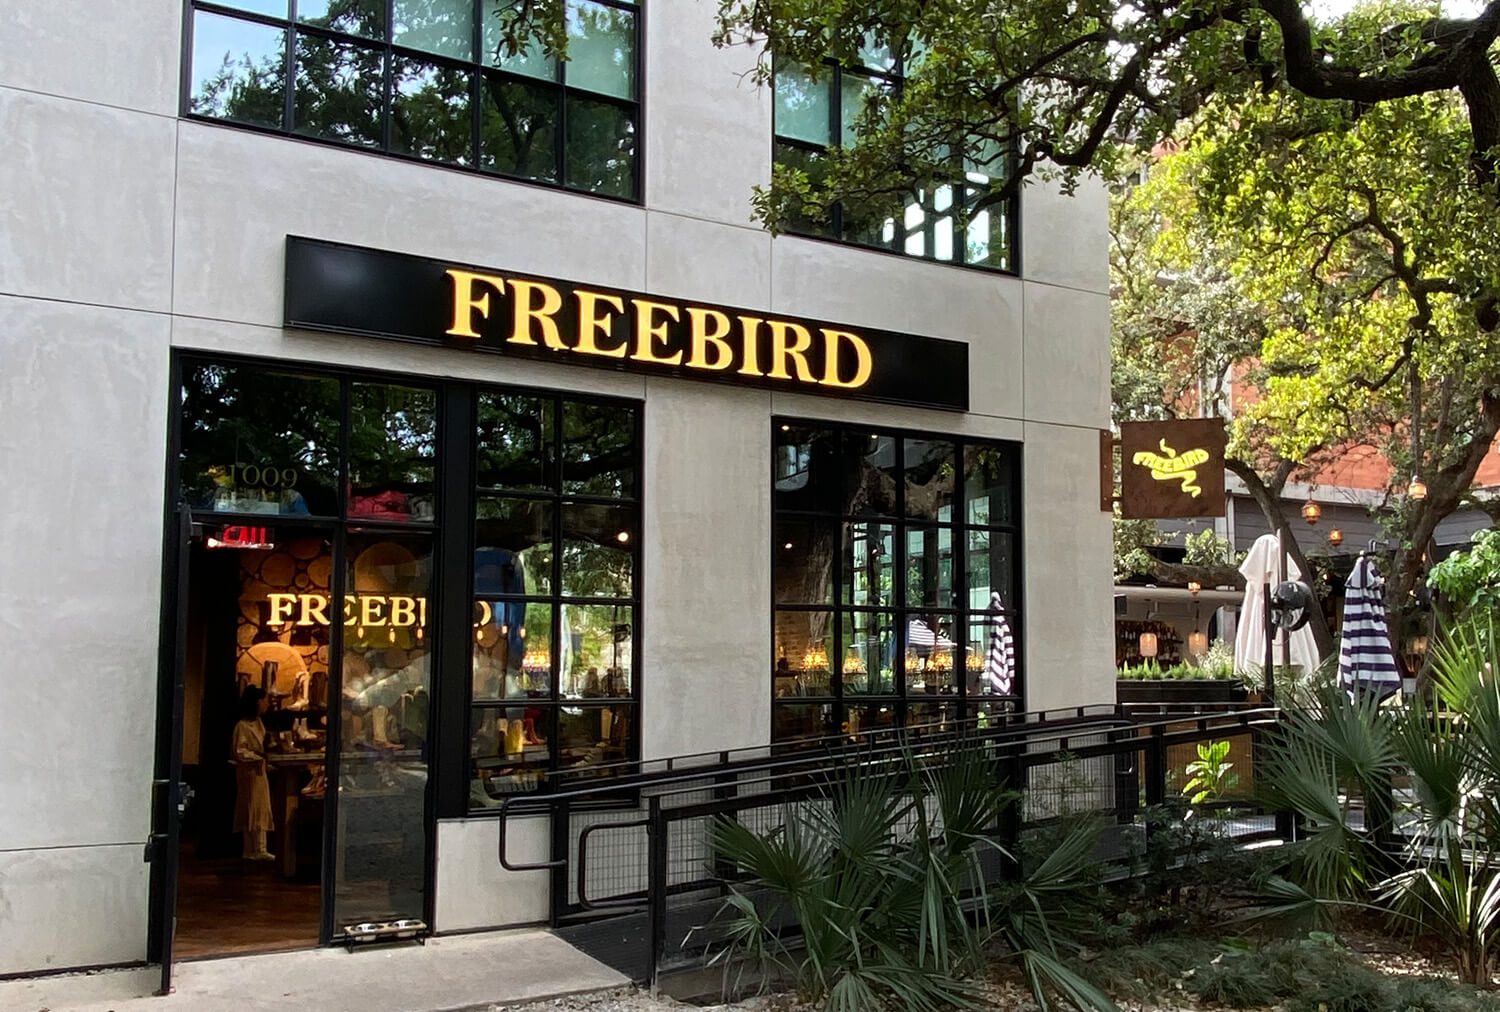 Freebird storefront